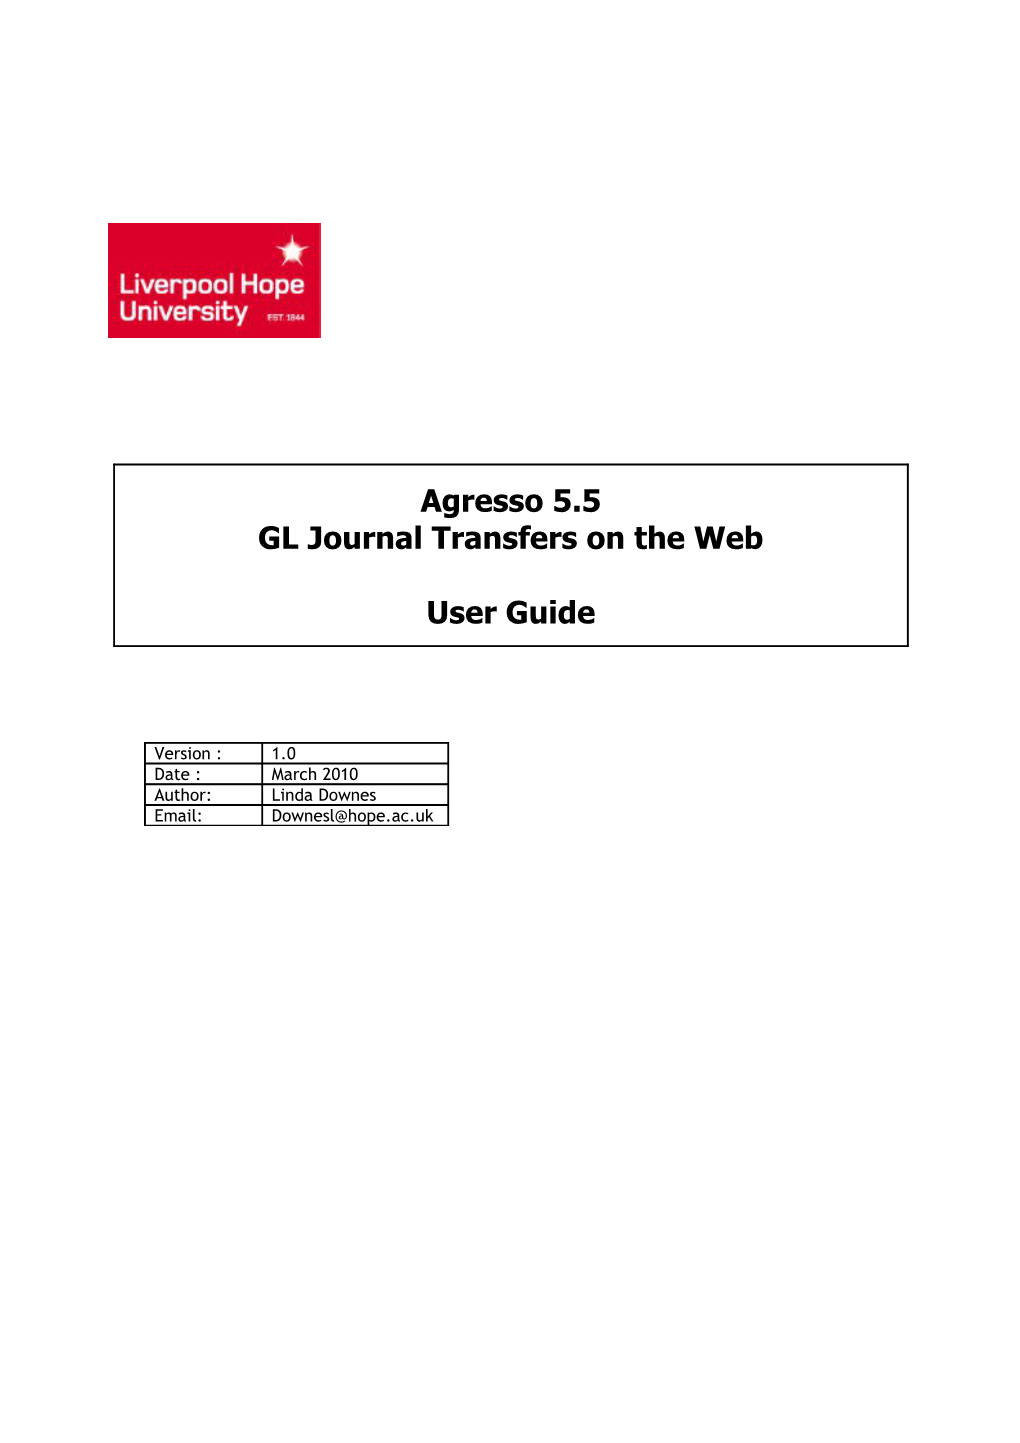 2.How to Enter GL Transfer